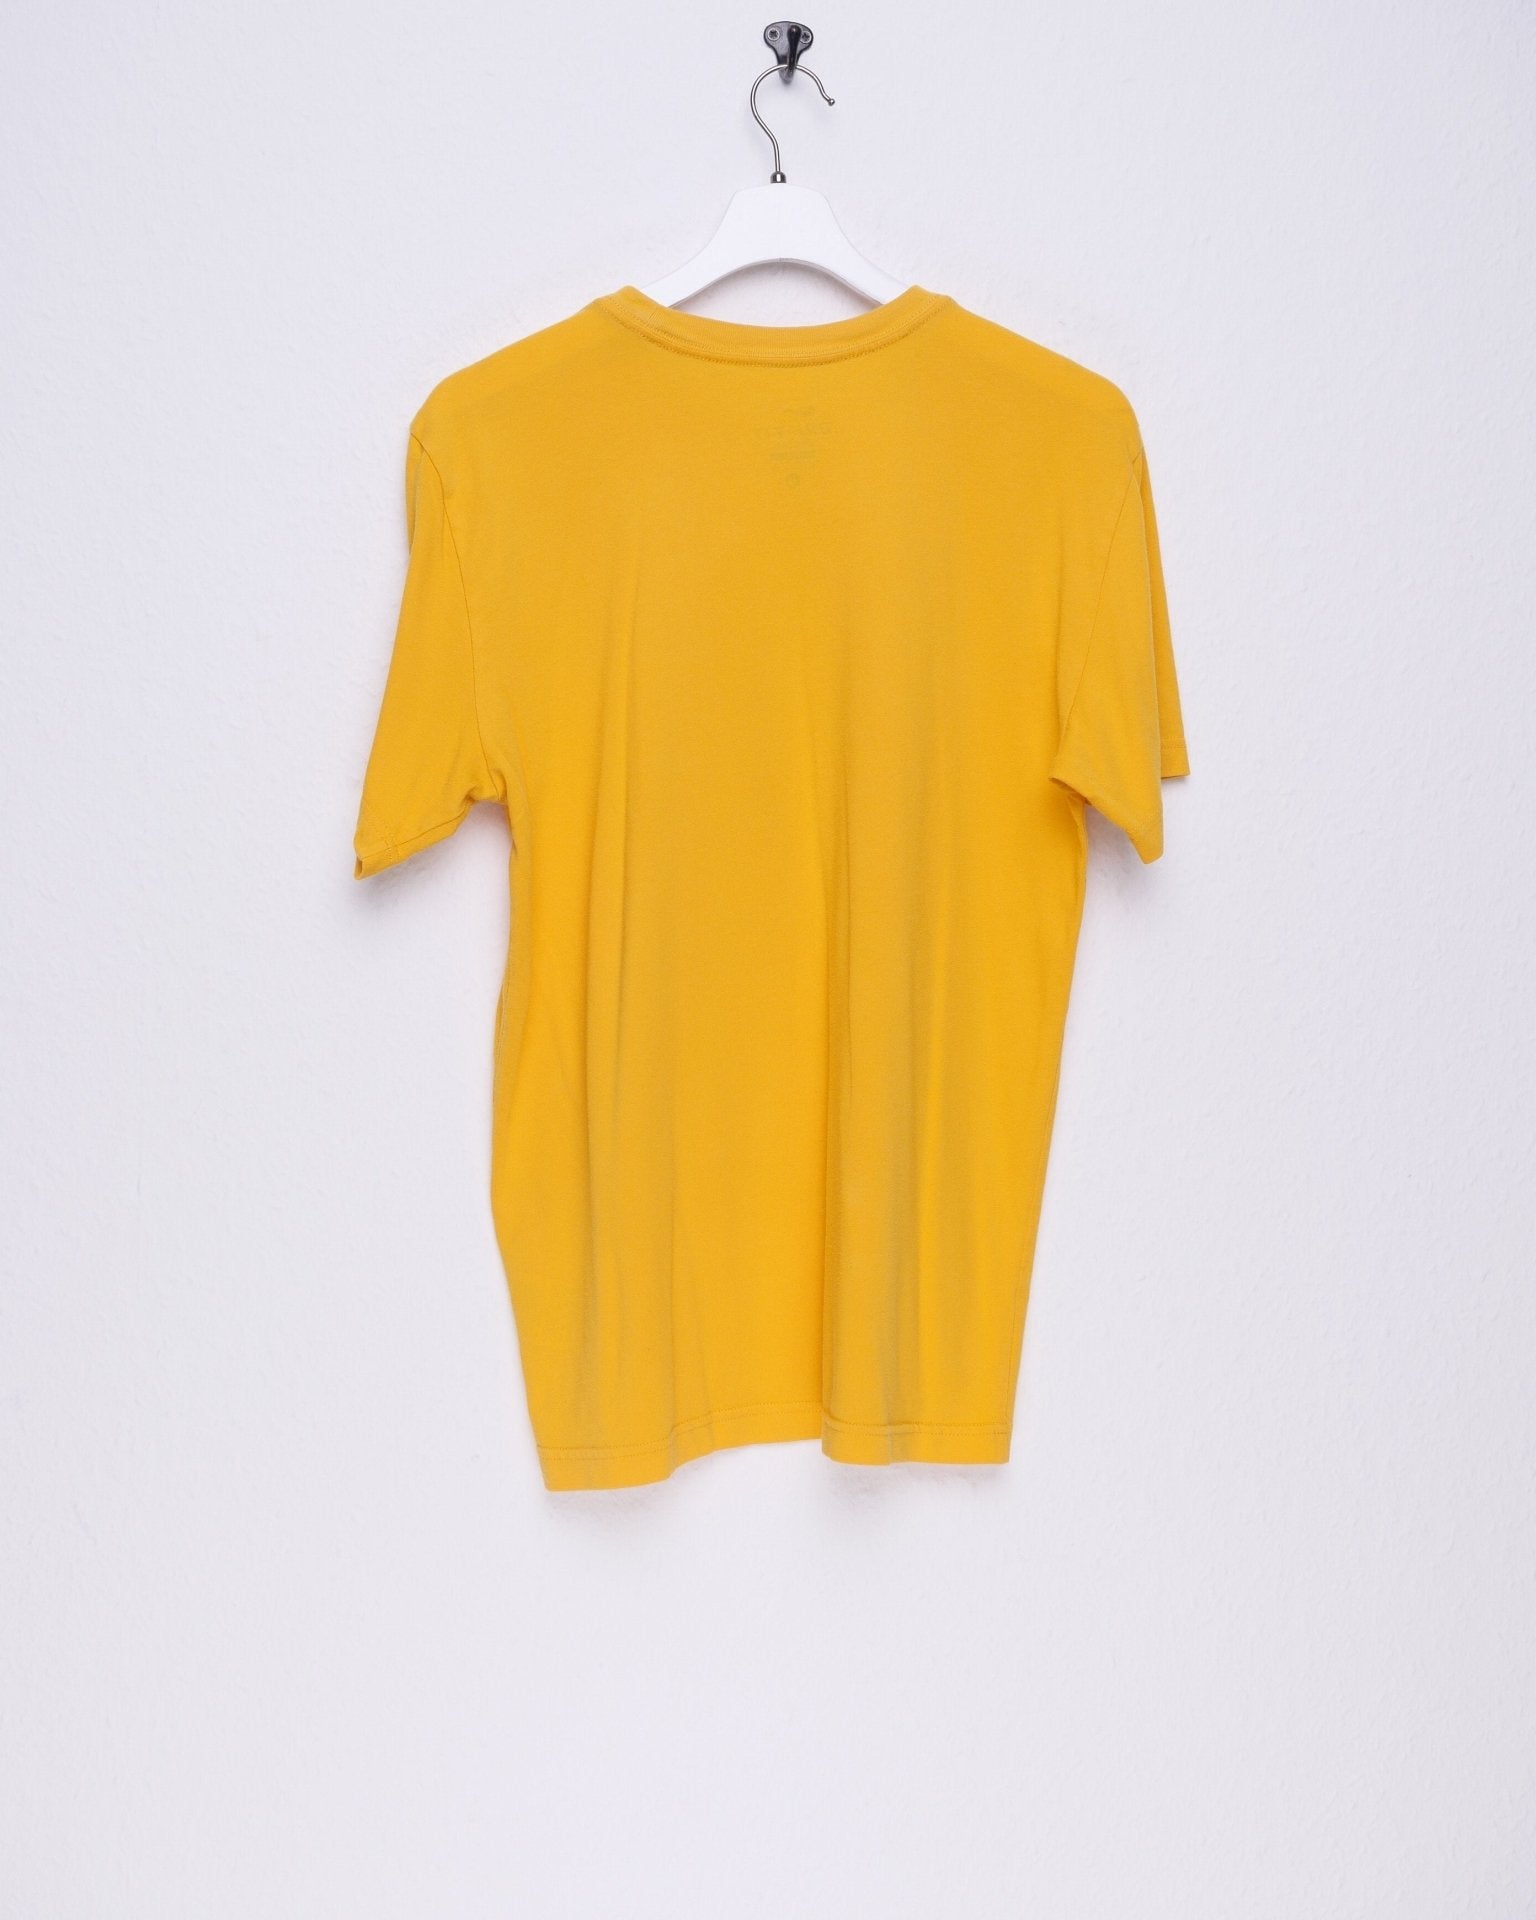 nike printed Swoosh Dri-Fit yellow Shirt - Peeces